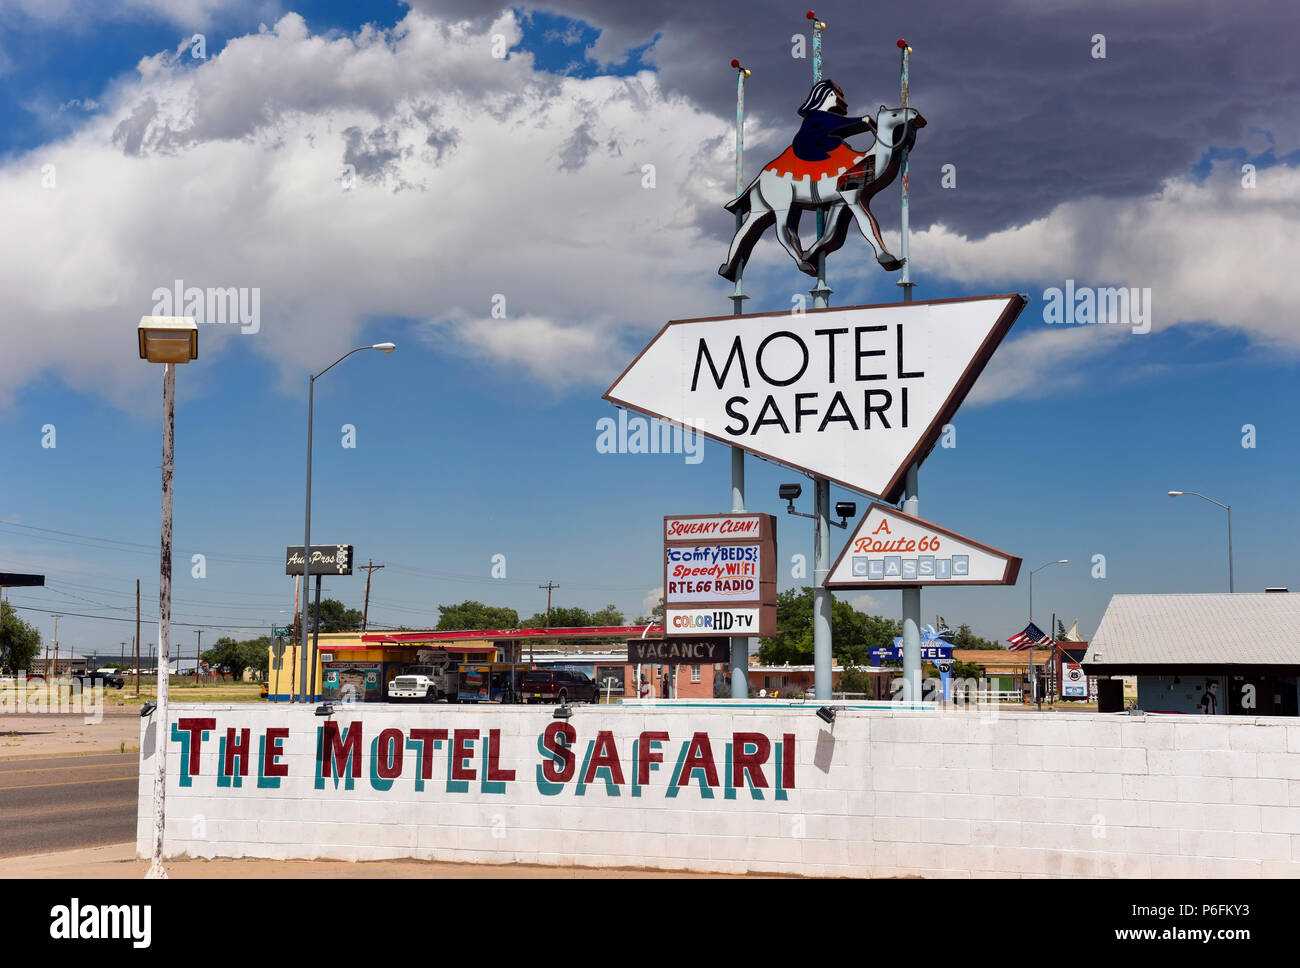 Das Motel Safari in Santa Fe, New Mexico, USA Stockfoto